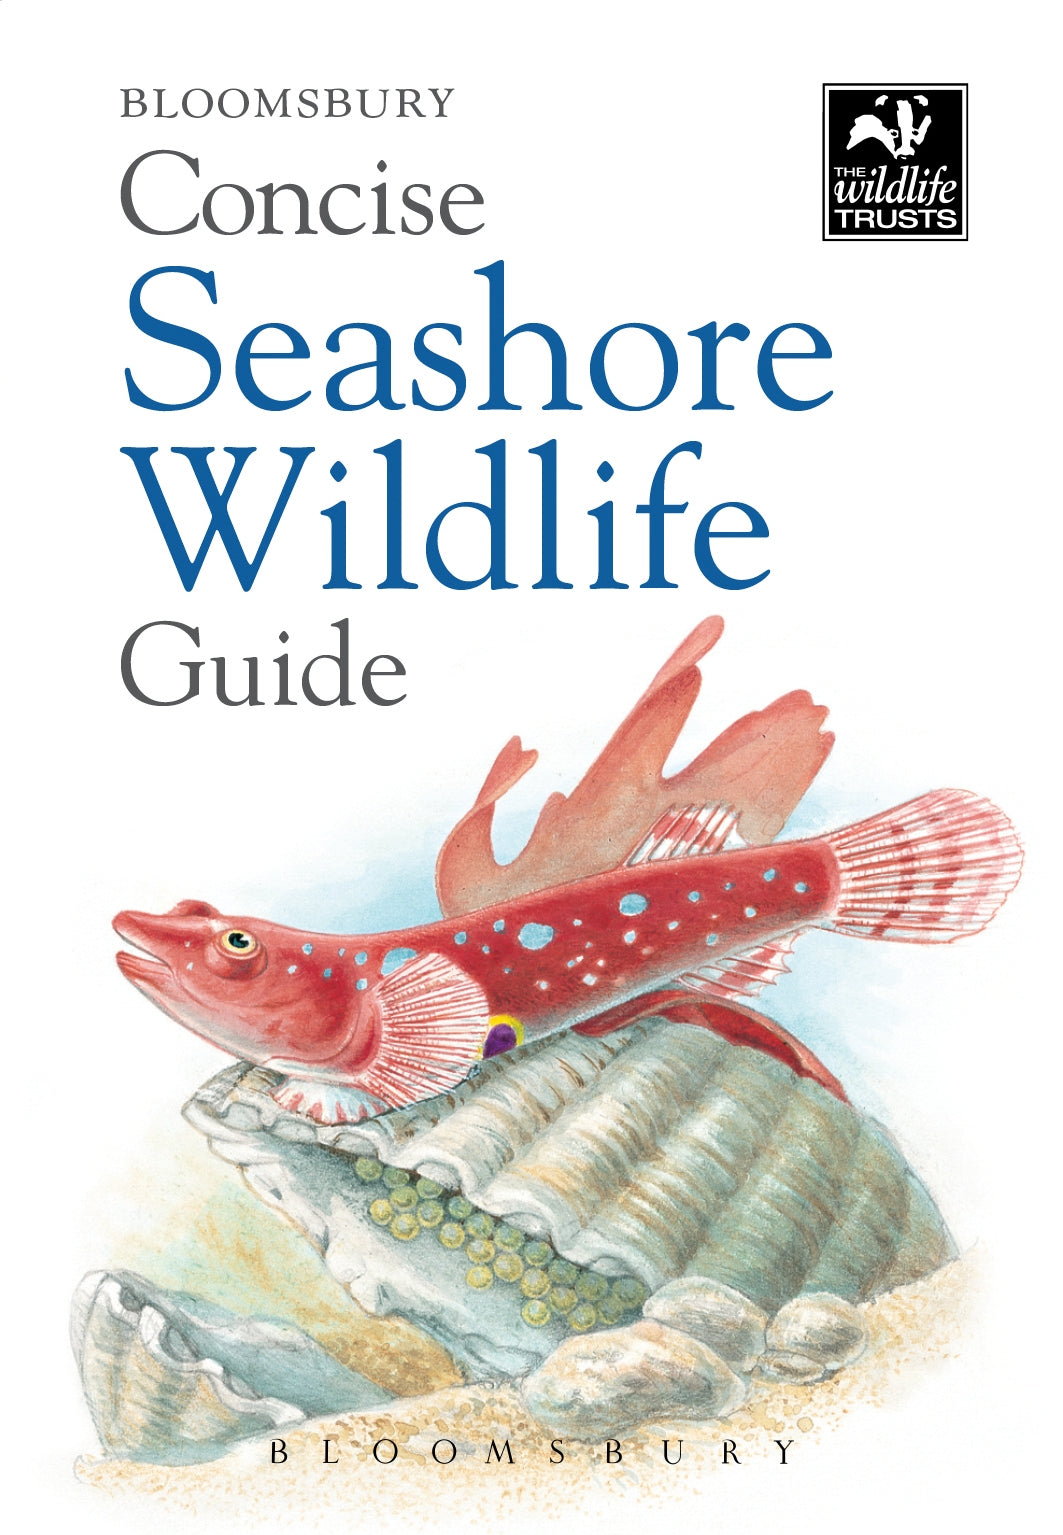 Bloomsbury concise guide - seashore wildlife